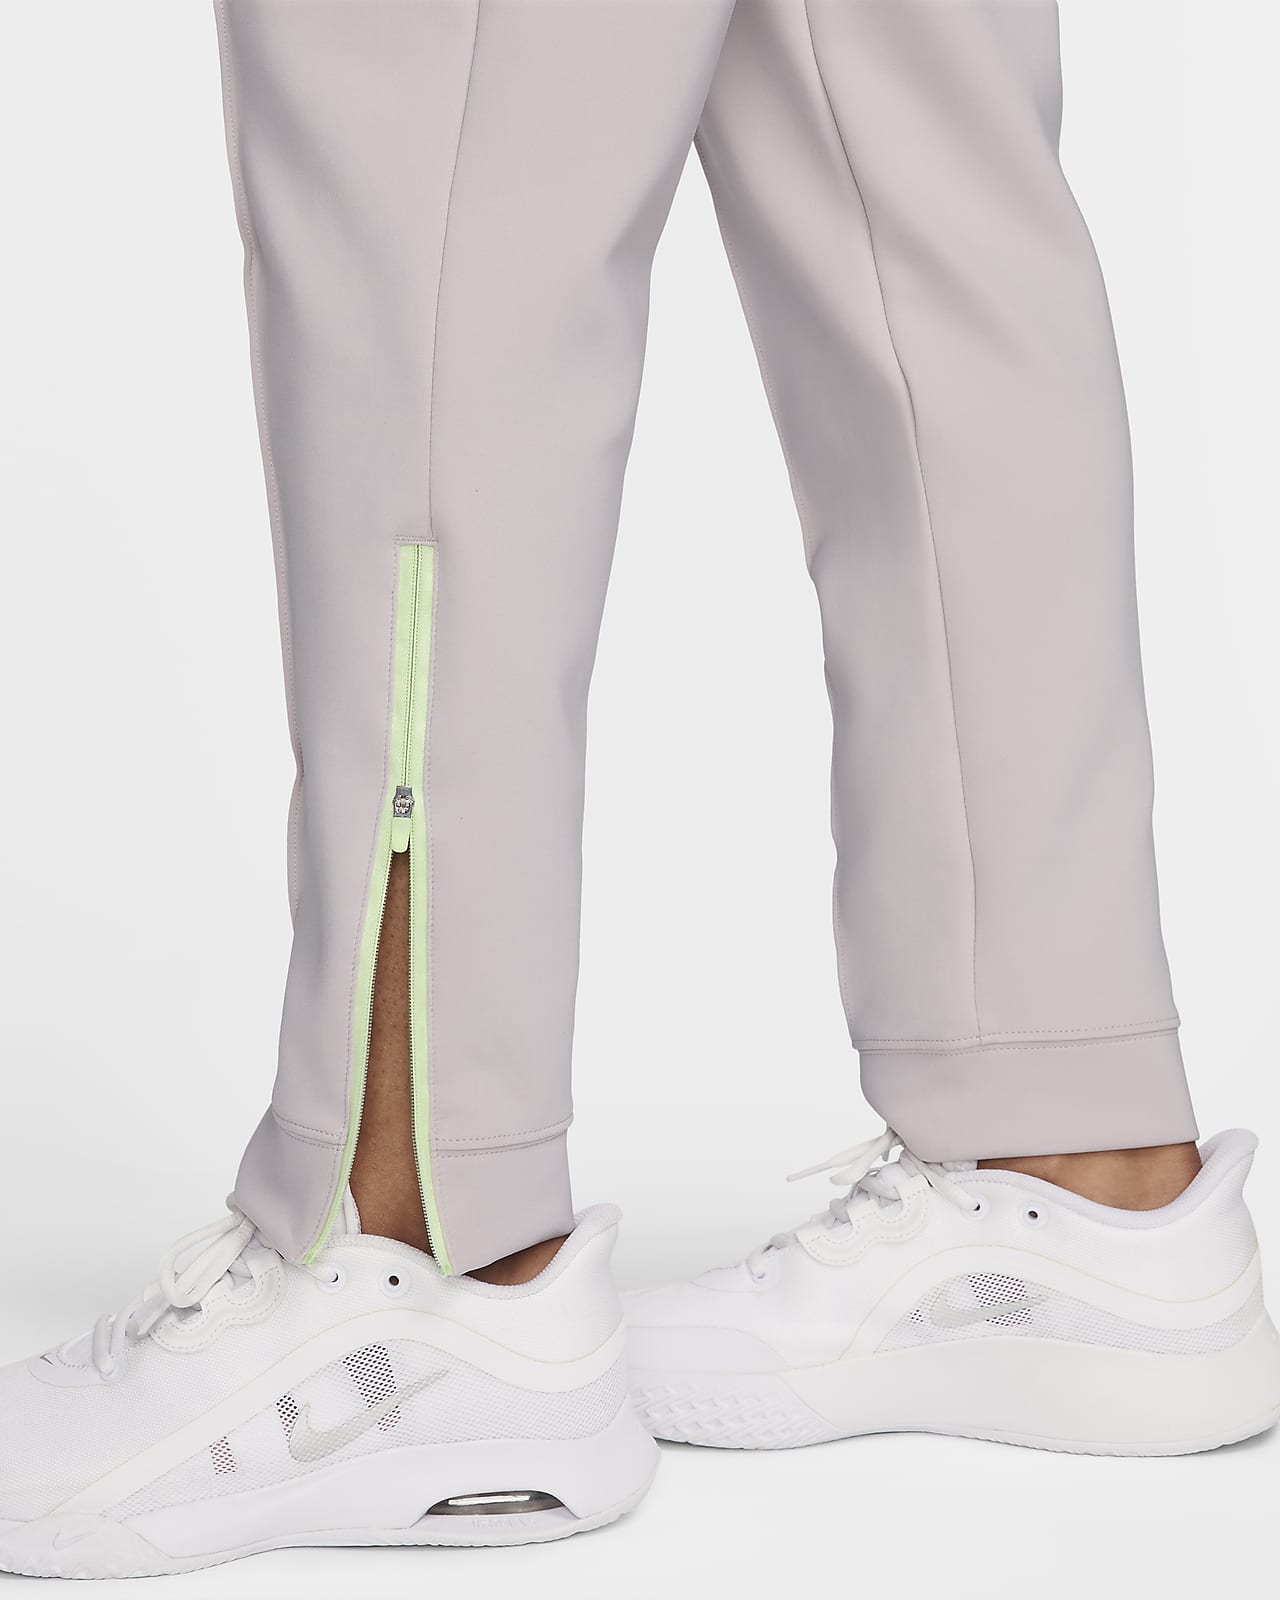 Nike Dri-FIT Get Fit Women's Padel Pants - Alligator/White